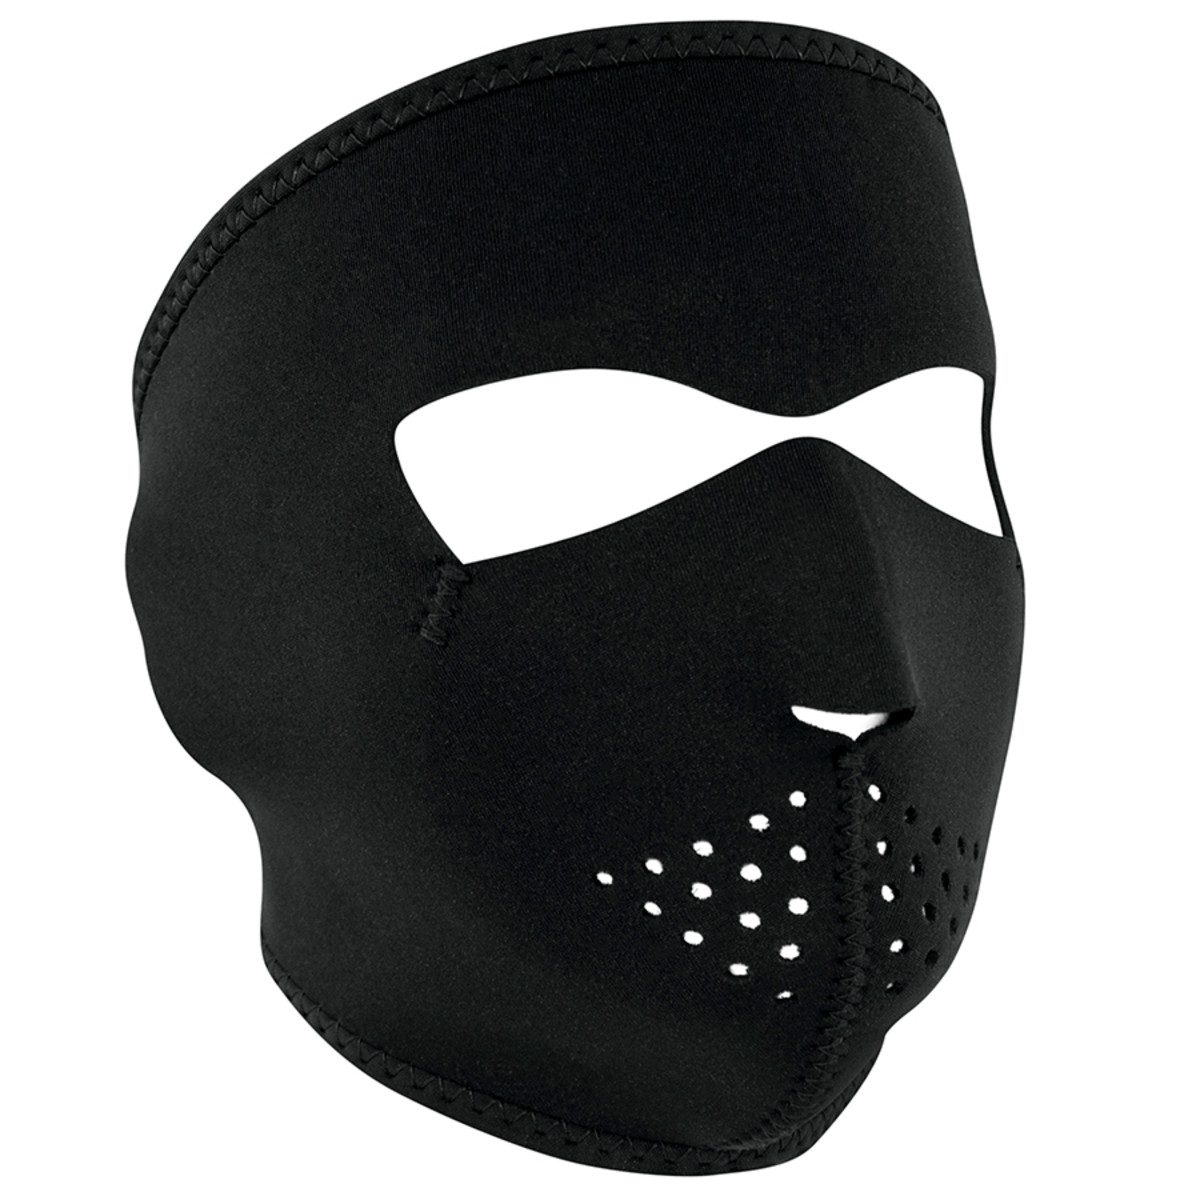 Zan Headgear Neoprene Full Face Mask - Black